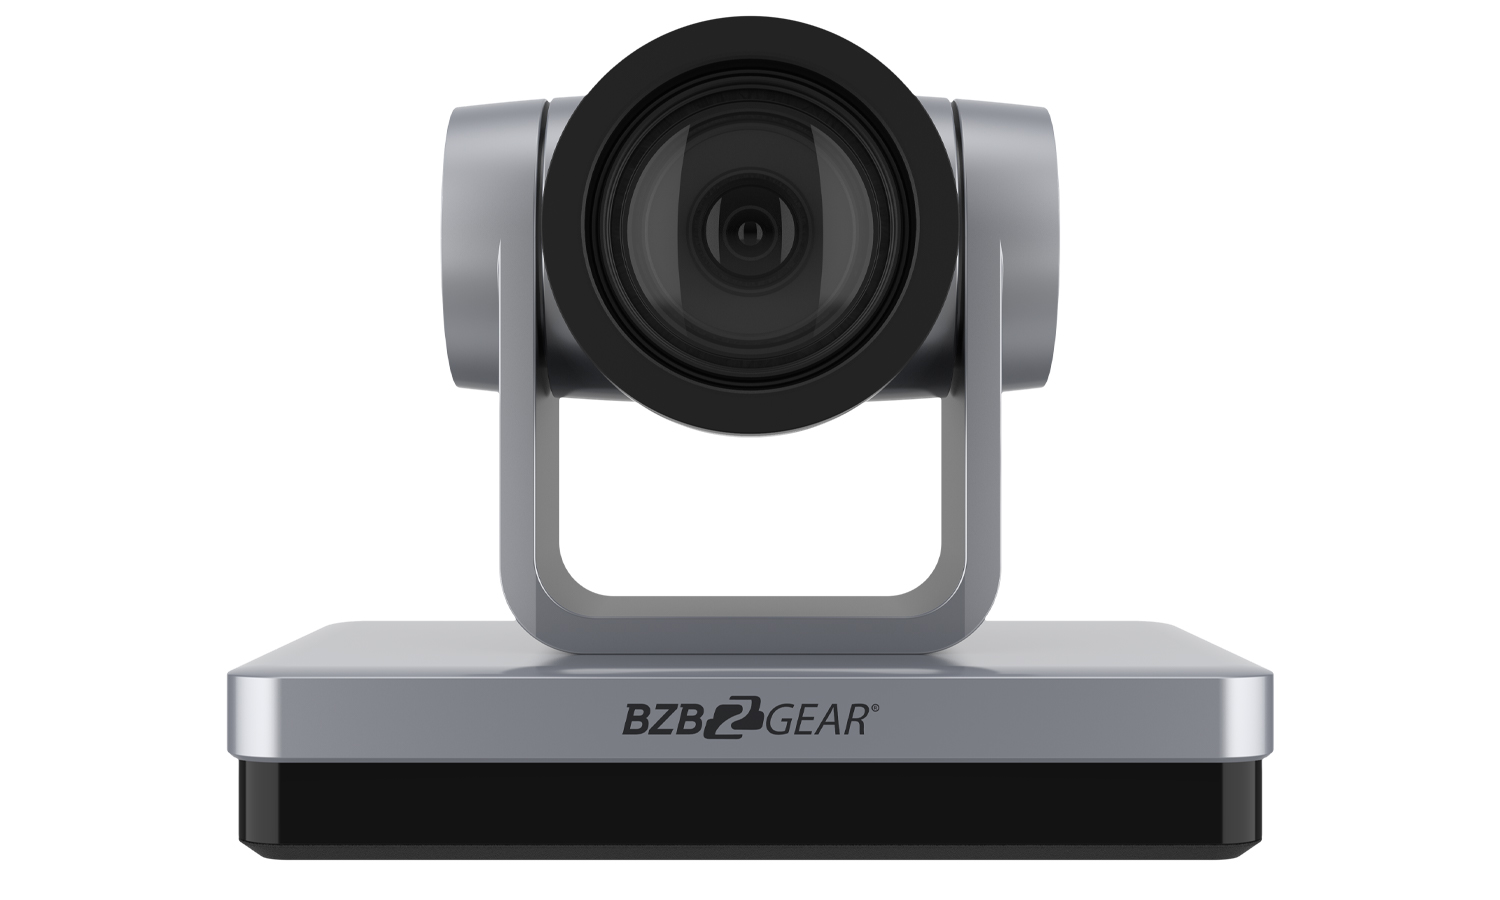 BG-UPTZ-30XHSU-S Universal 1080P FHD PTZ 30X HDMI/SDI/USB 3.0 RS232/485 Live Streaming Camera (Silver) by BZBGEAR